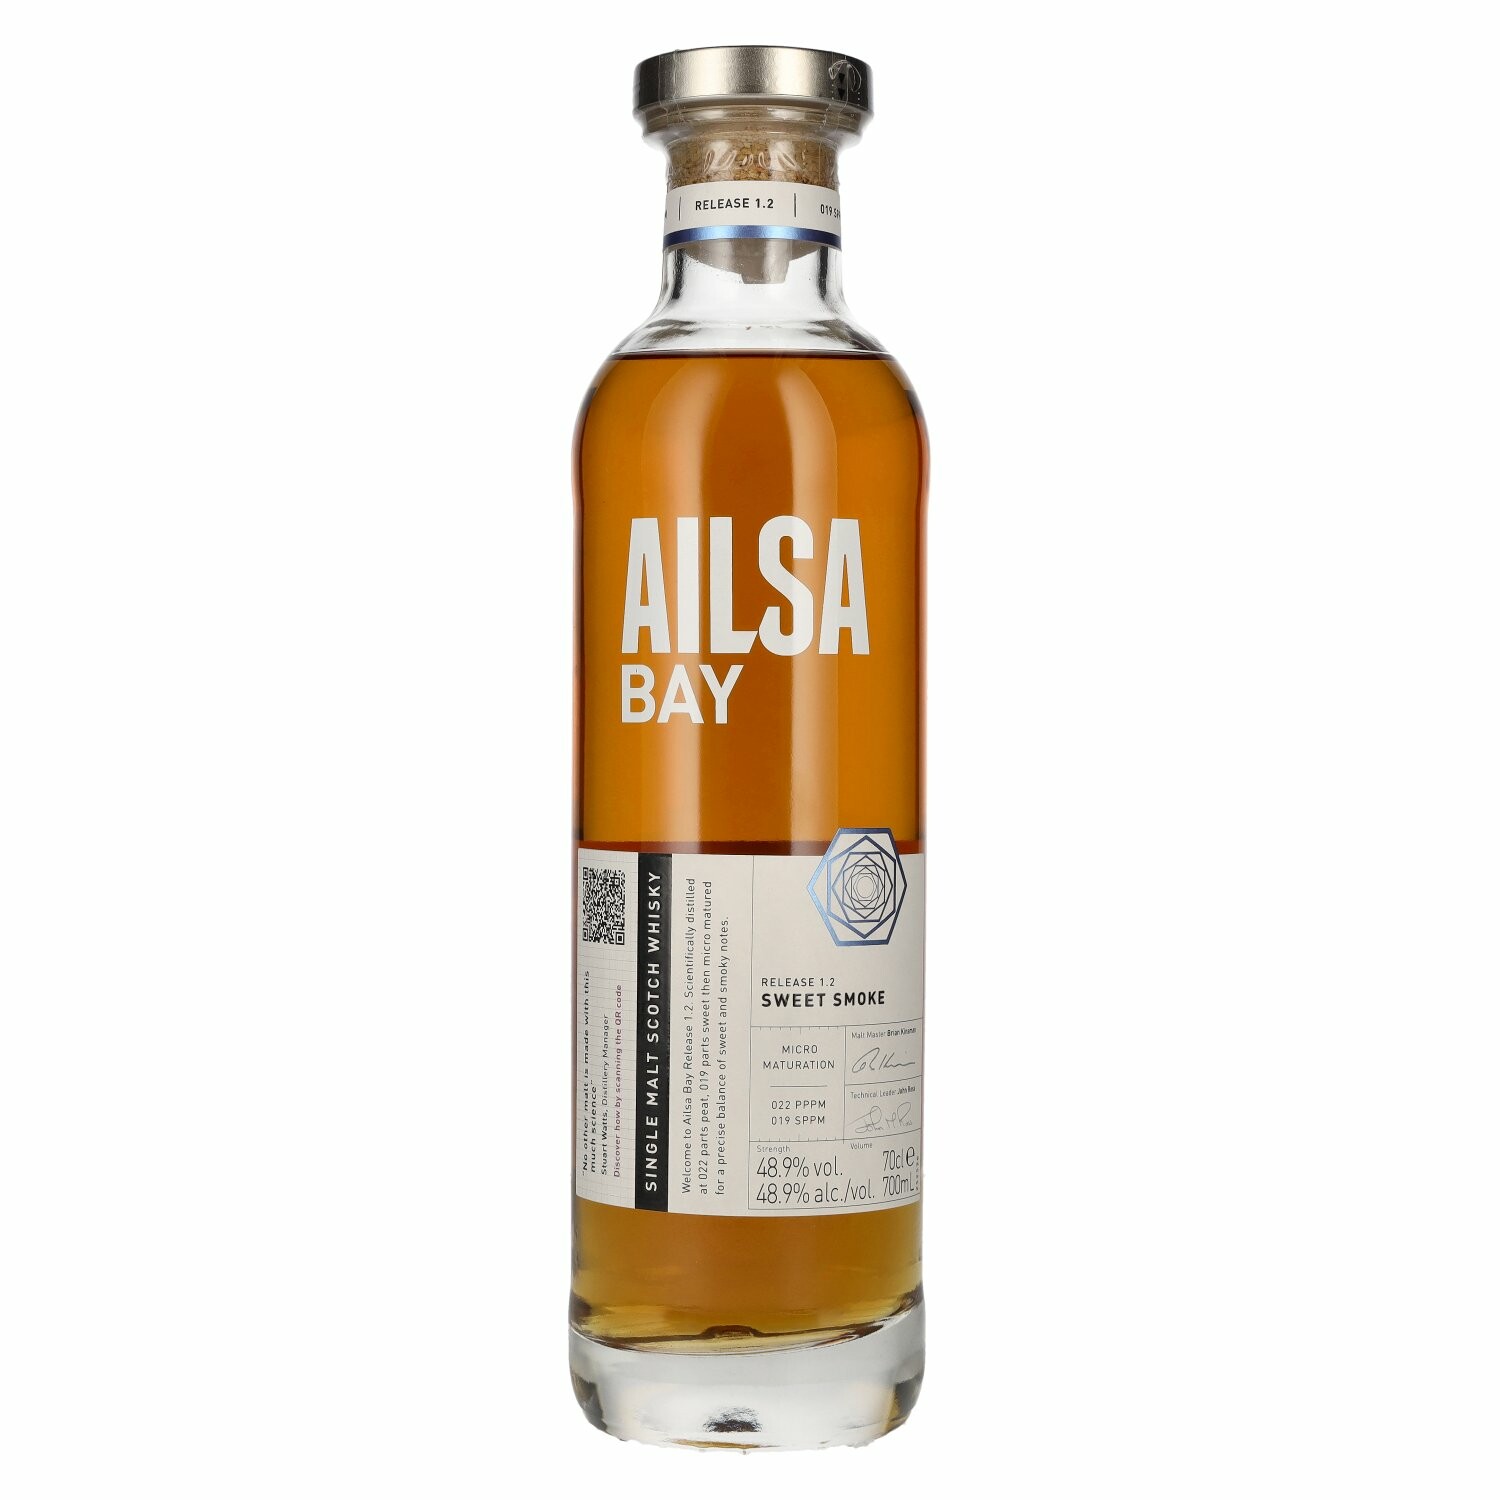 Ailsa Bay SWEET SMOKE Single Malt Scotch Whisky Release 1.2 48,9% Vol. 0,7l